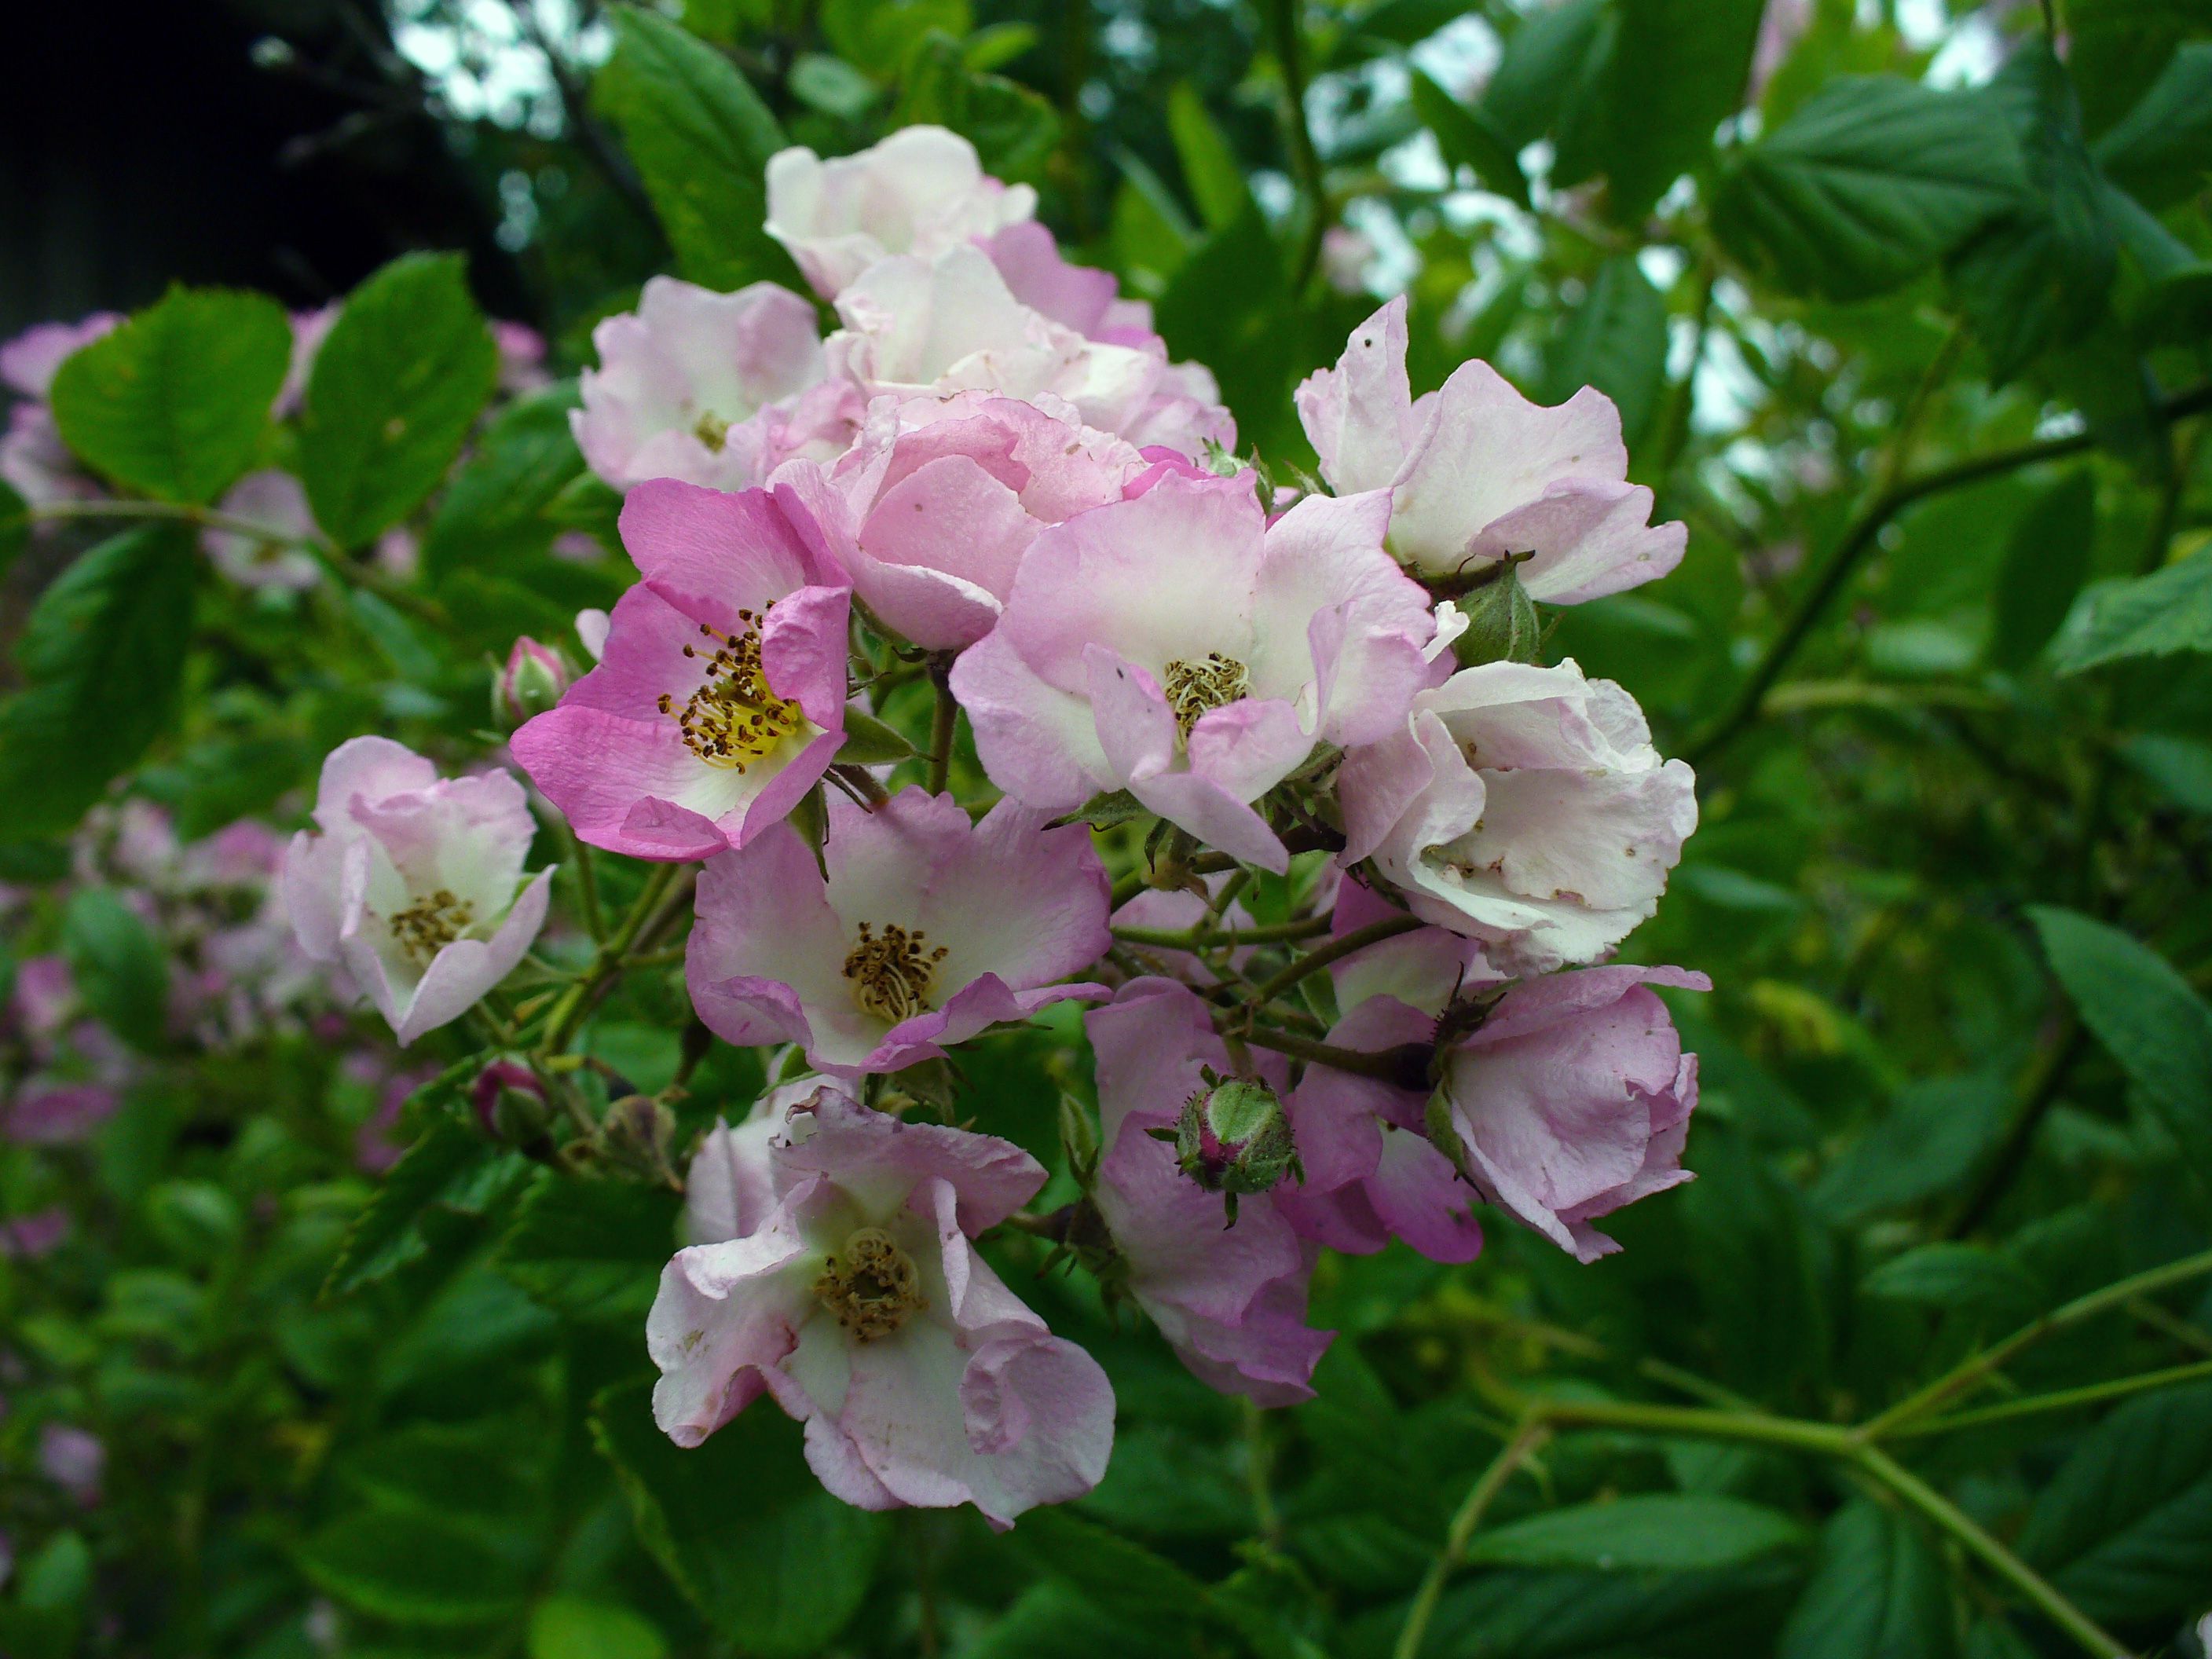 Free Image: Pink Flowers | Libreshot Public Domain Photos